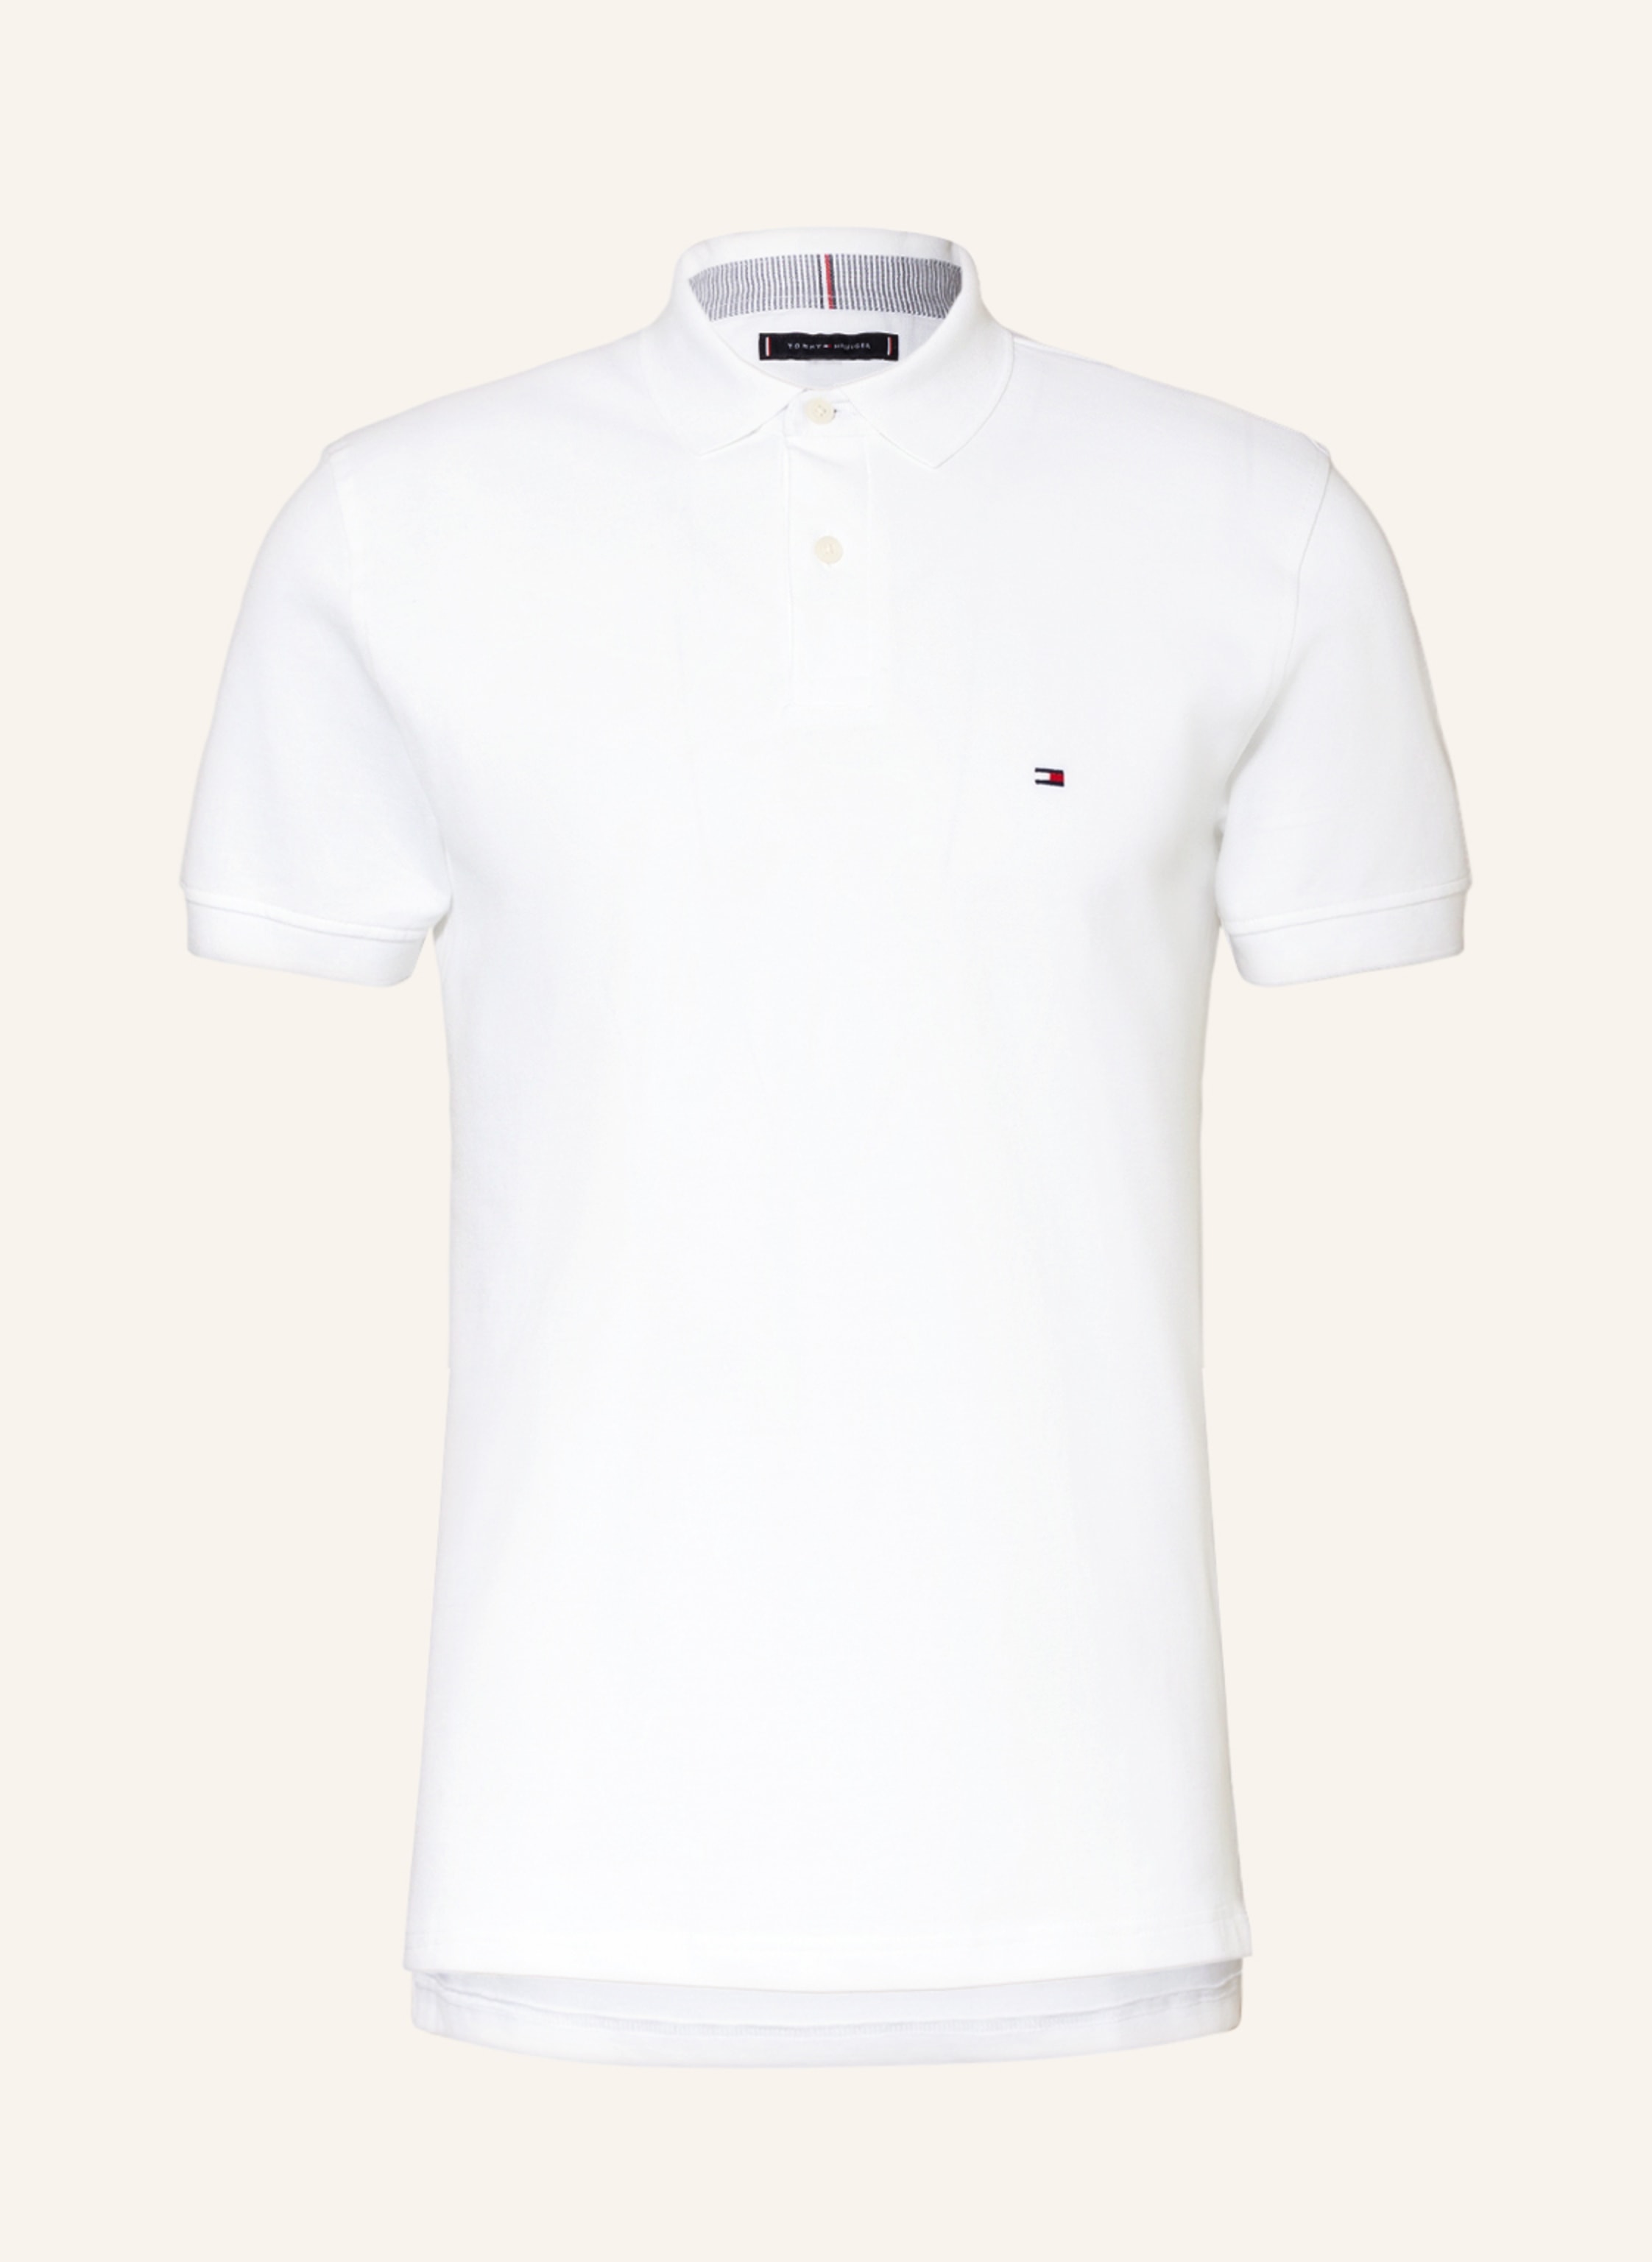 HILFIGER Piqué shirt regular fit in white